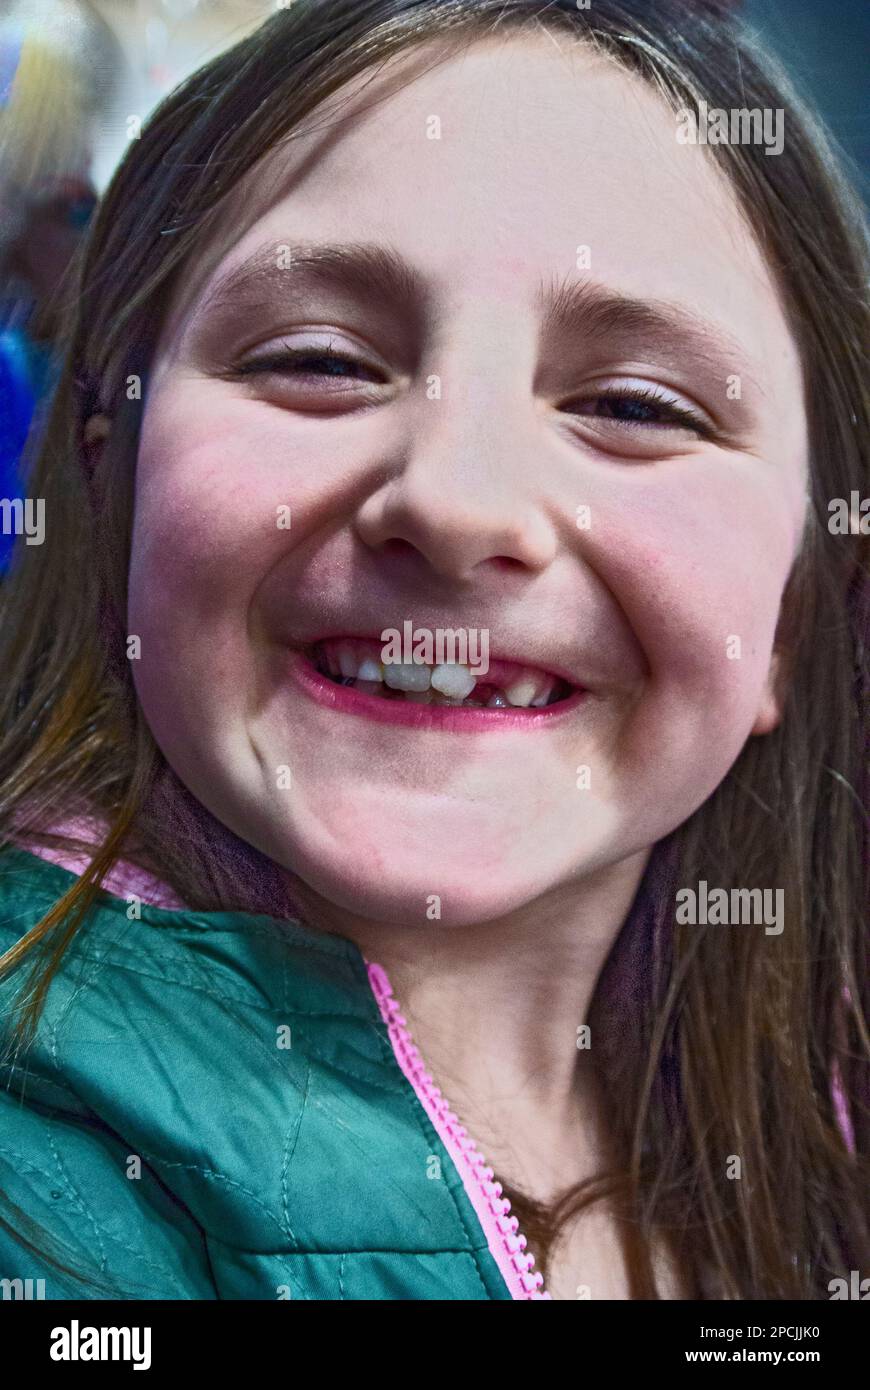 Felice ragazza giovane sorridente per la fotocamera in Indiana, USA. Foto Stock